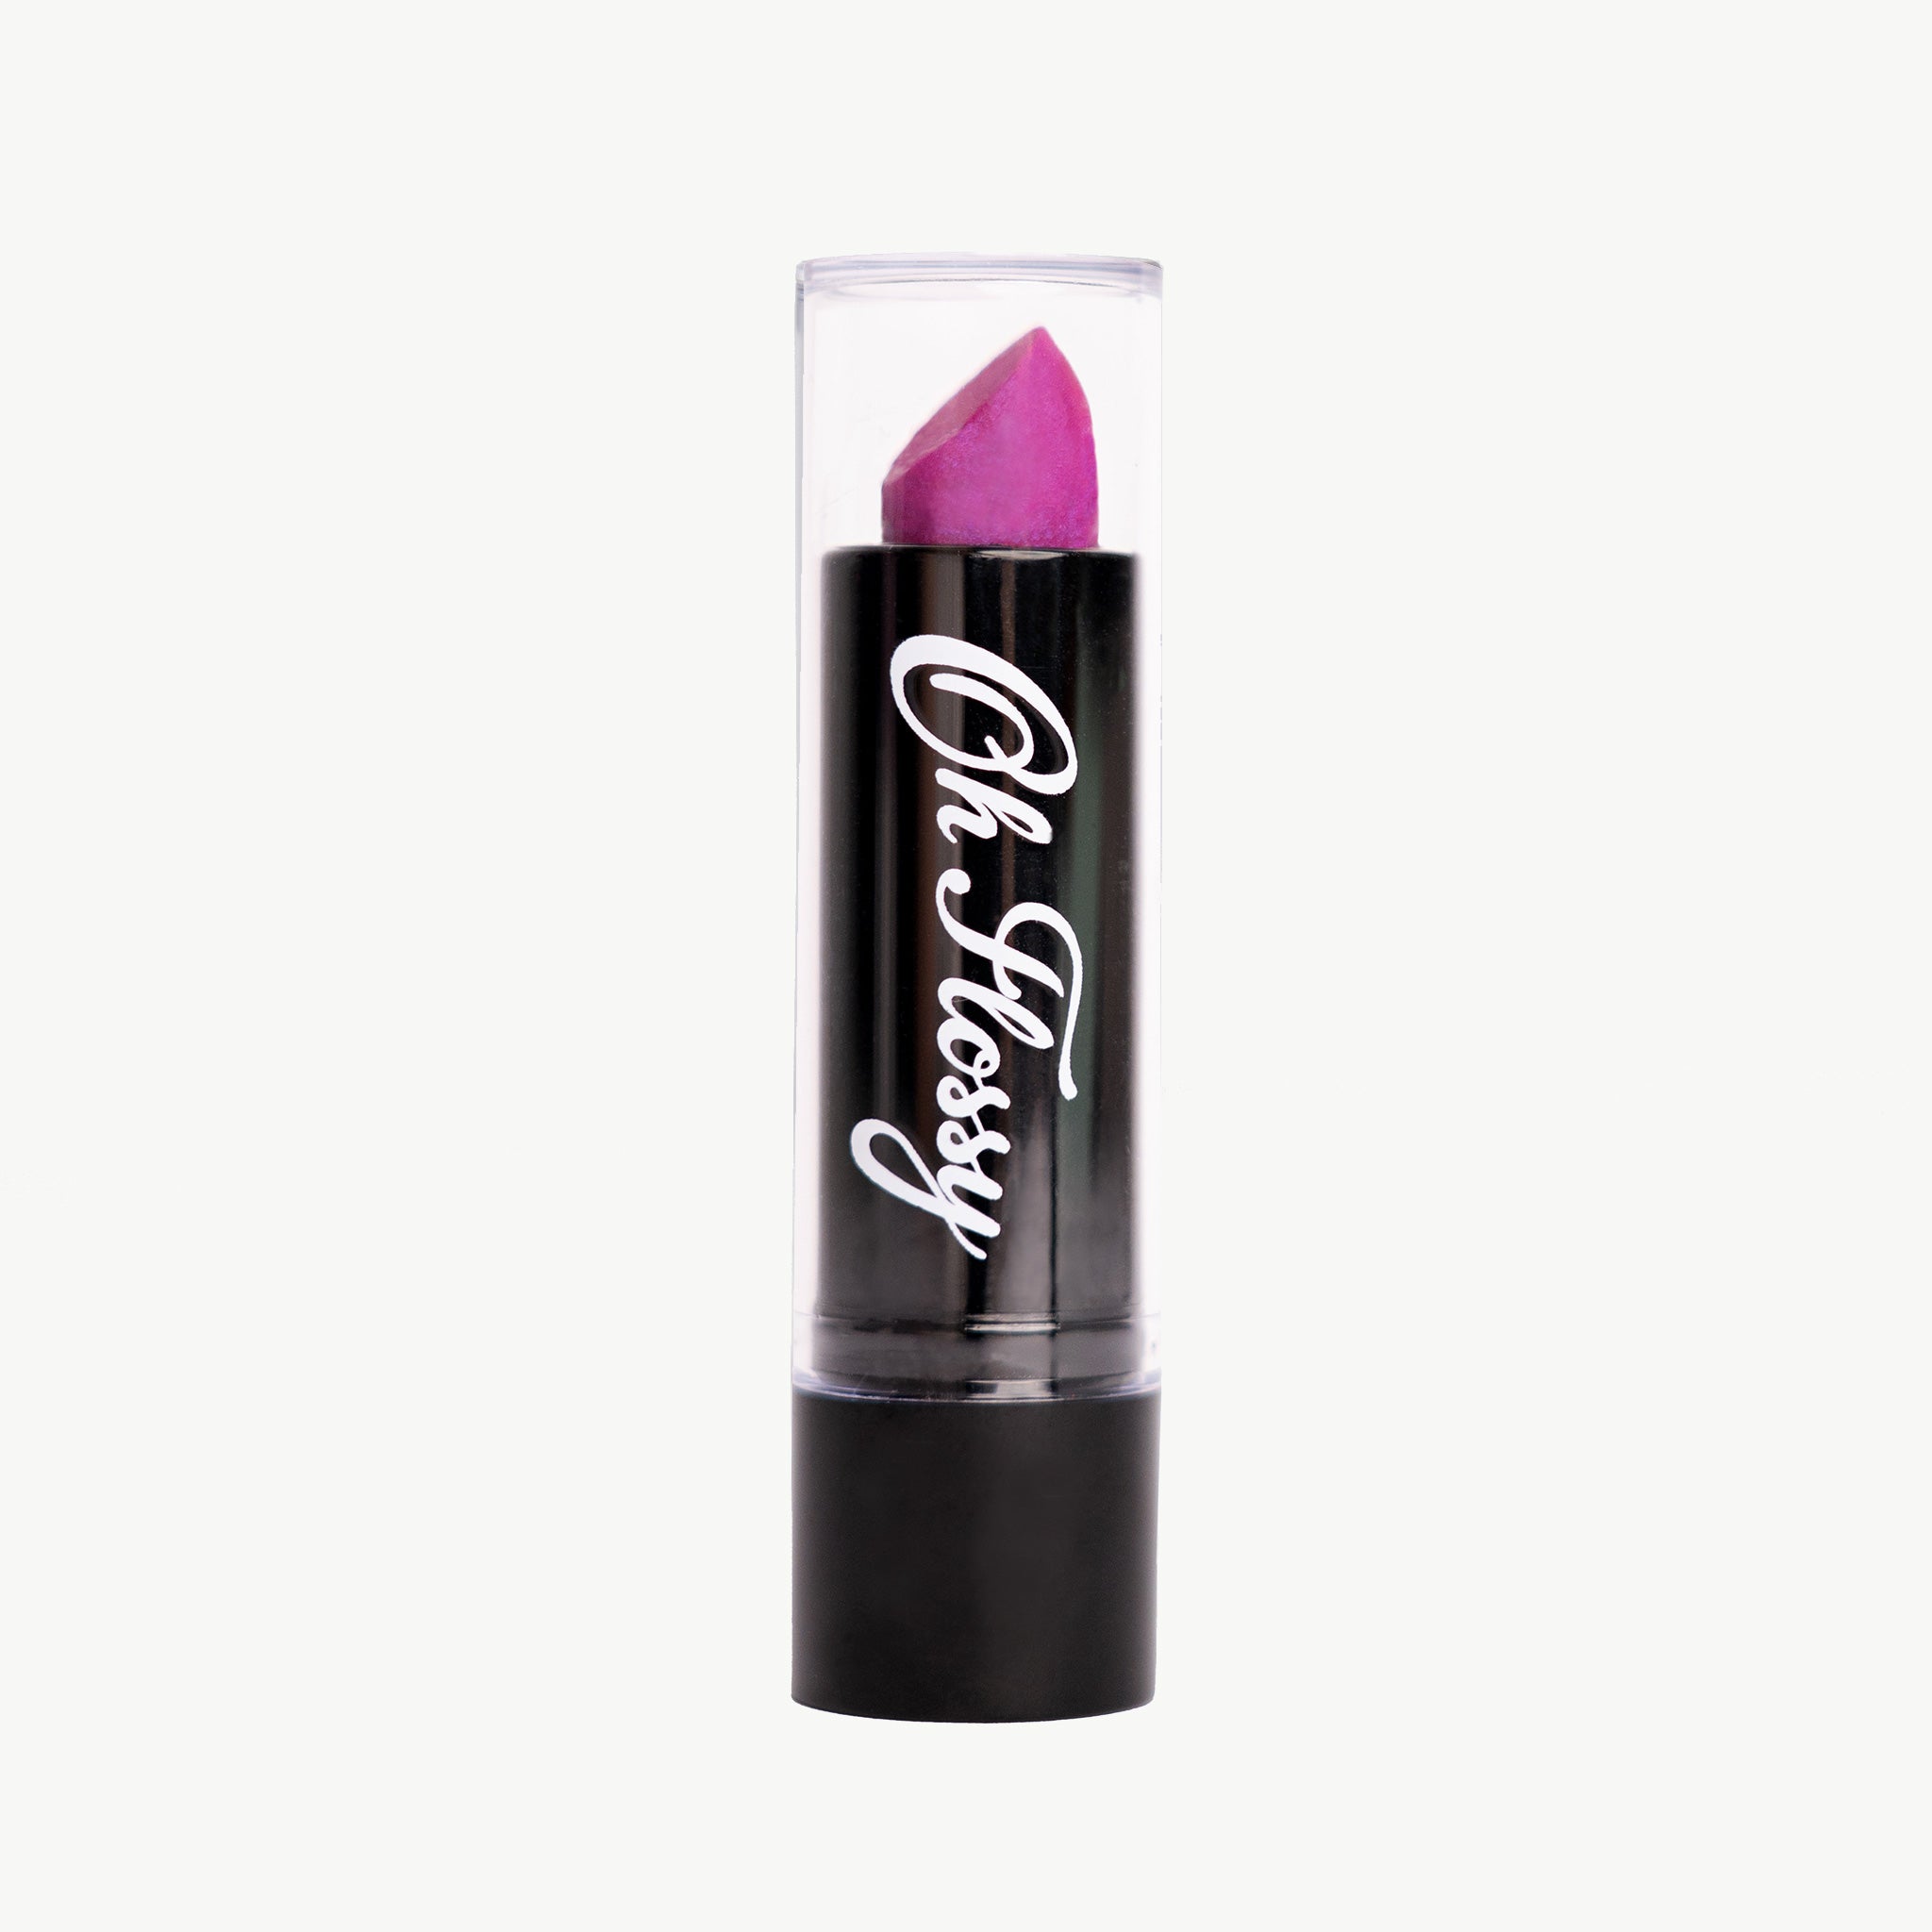 Oh-Flossy-Natural-Kids-Makeup-Lipstick-purple